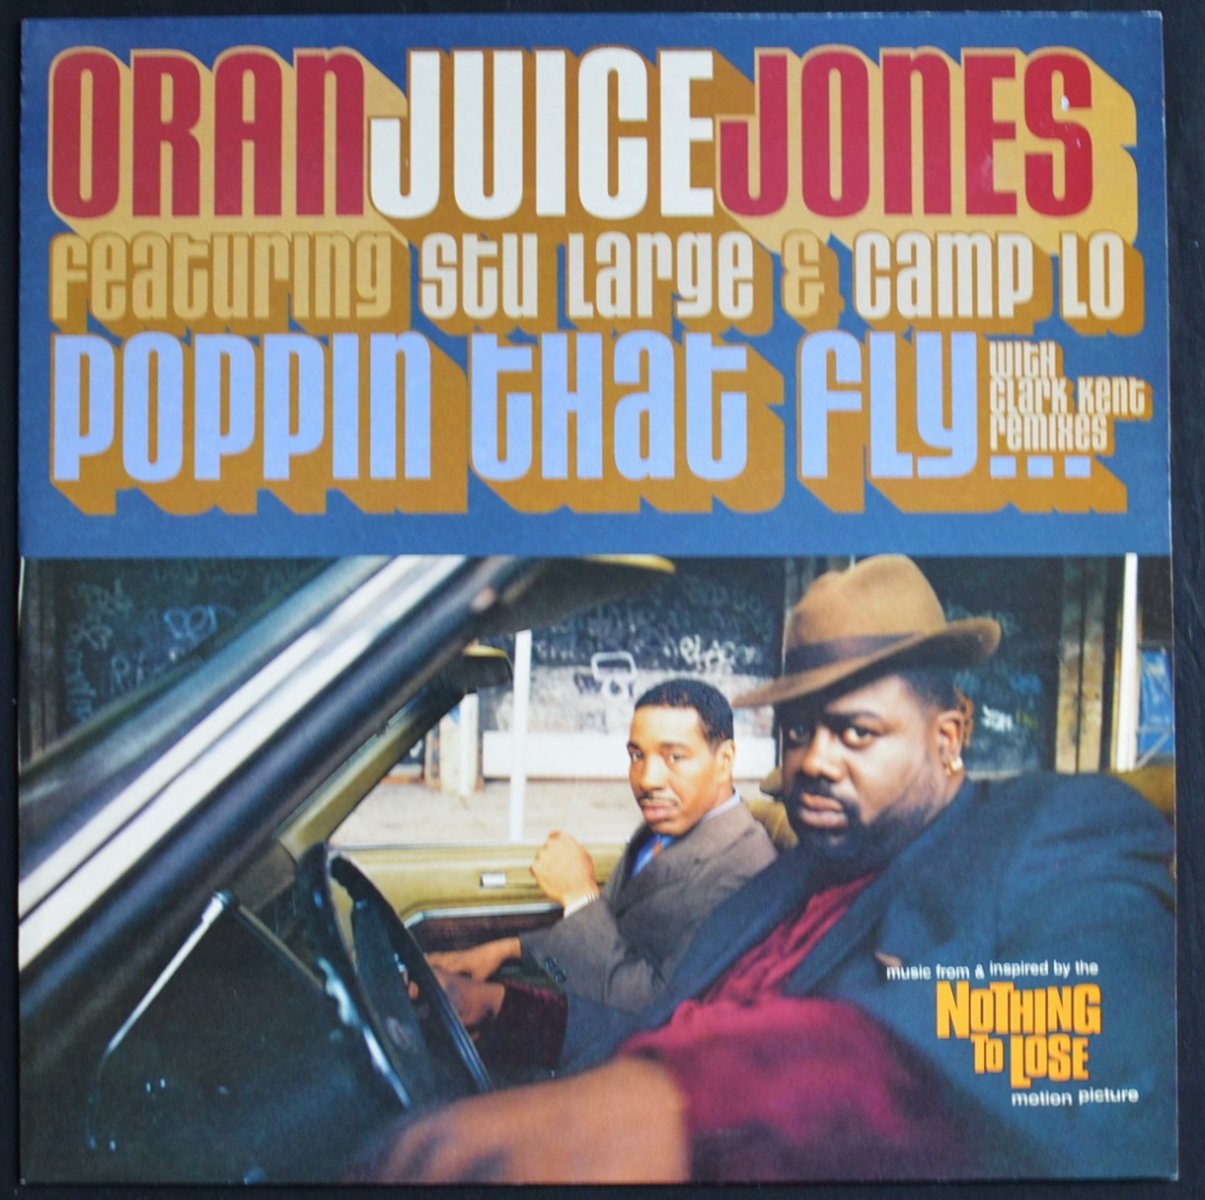 ORAN 'JUICE' JONES FEATURING STU LARGE & CAMP LO / POPPIN THAT FLY... (CLARK KENT REMIX) (12